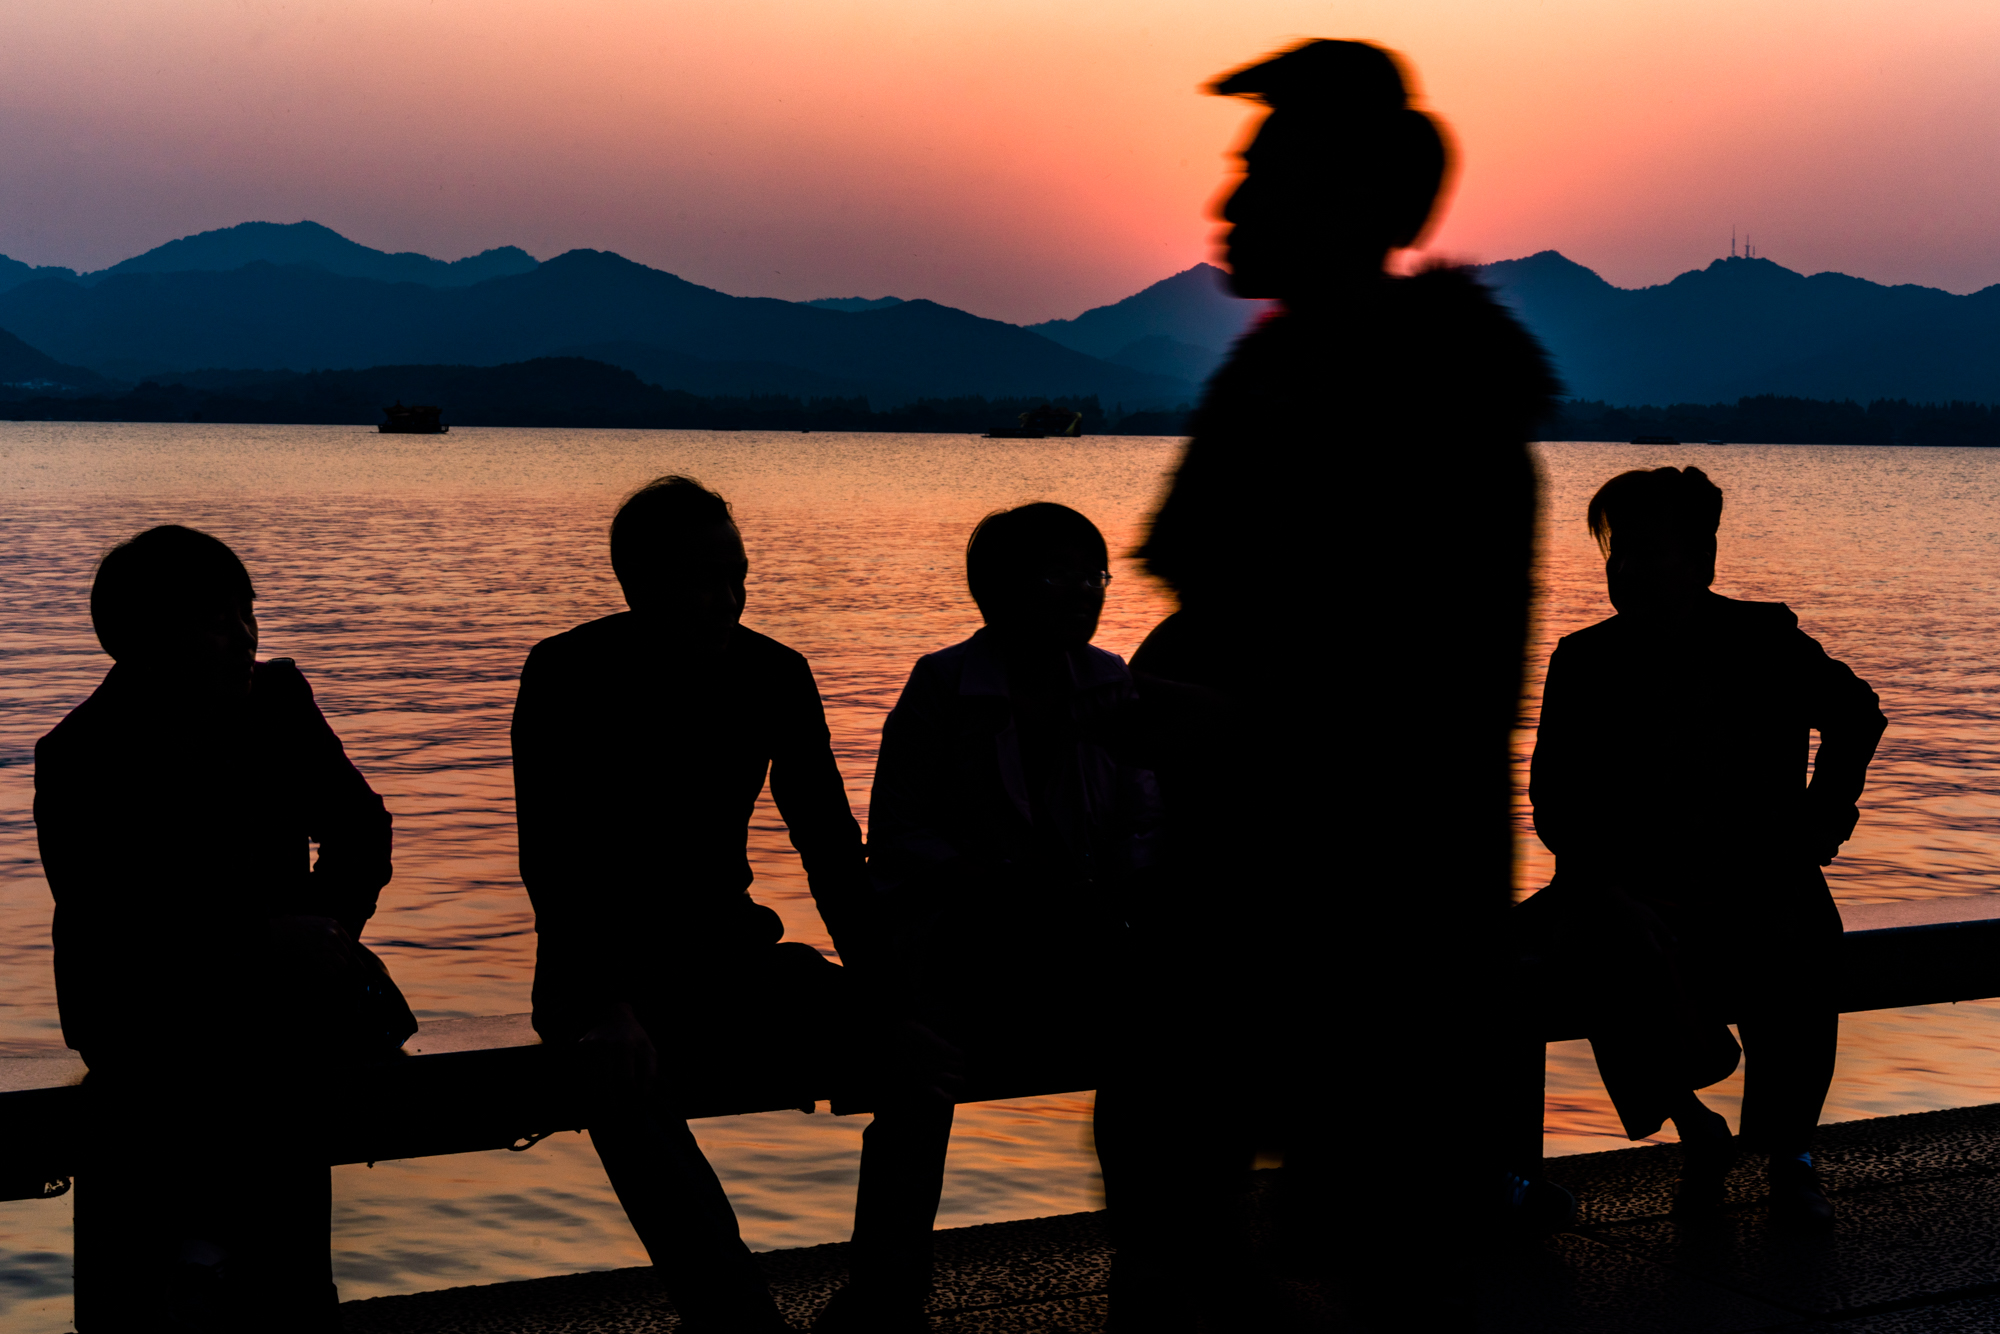 Men gather on a bridge at sunset in Hangzhou, China